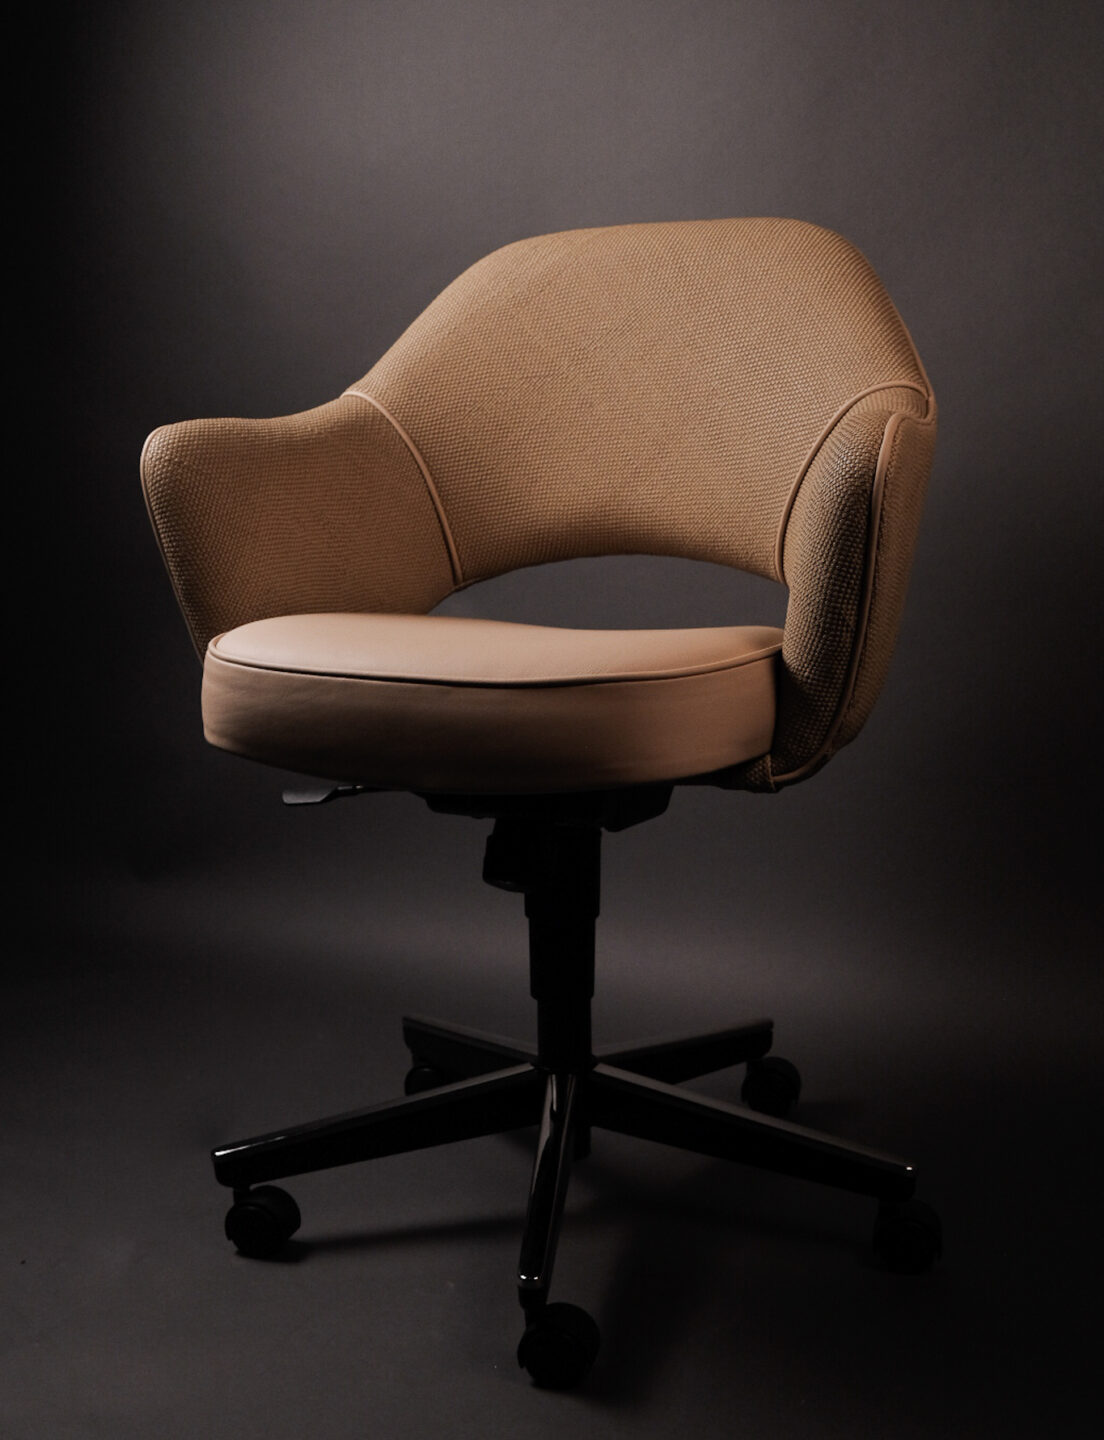 Saarinen Chair in Natural-2